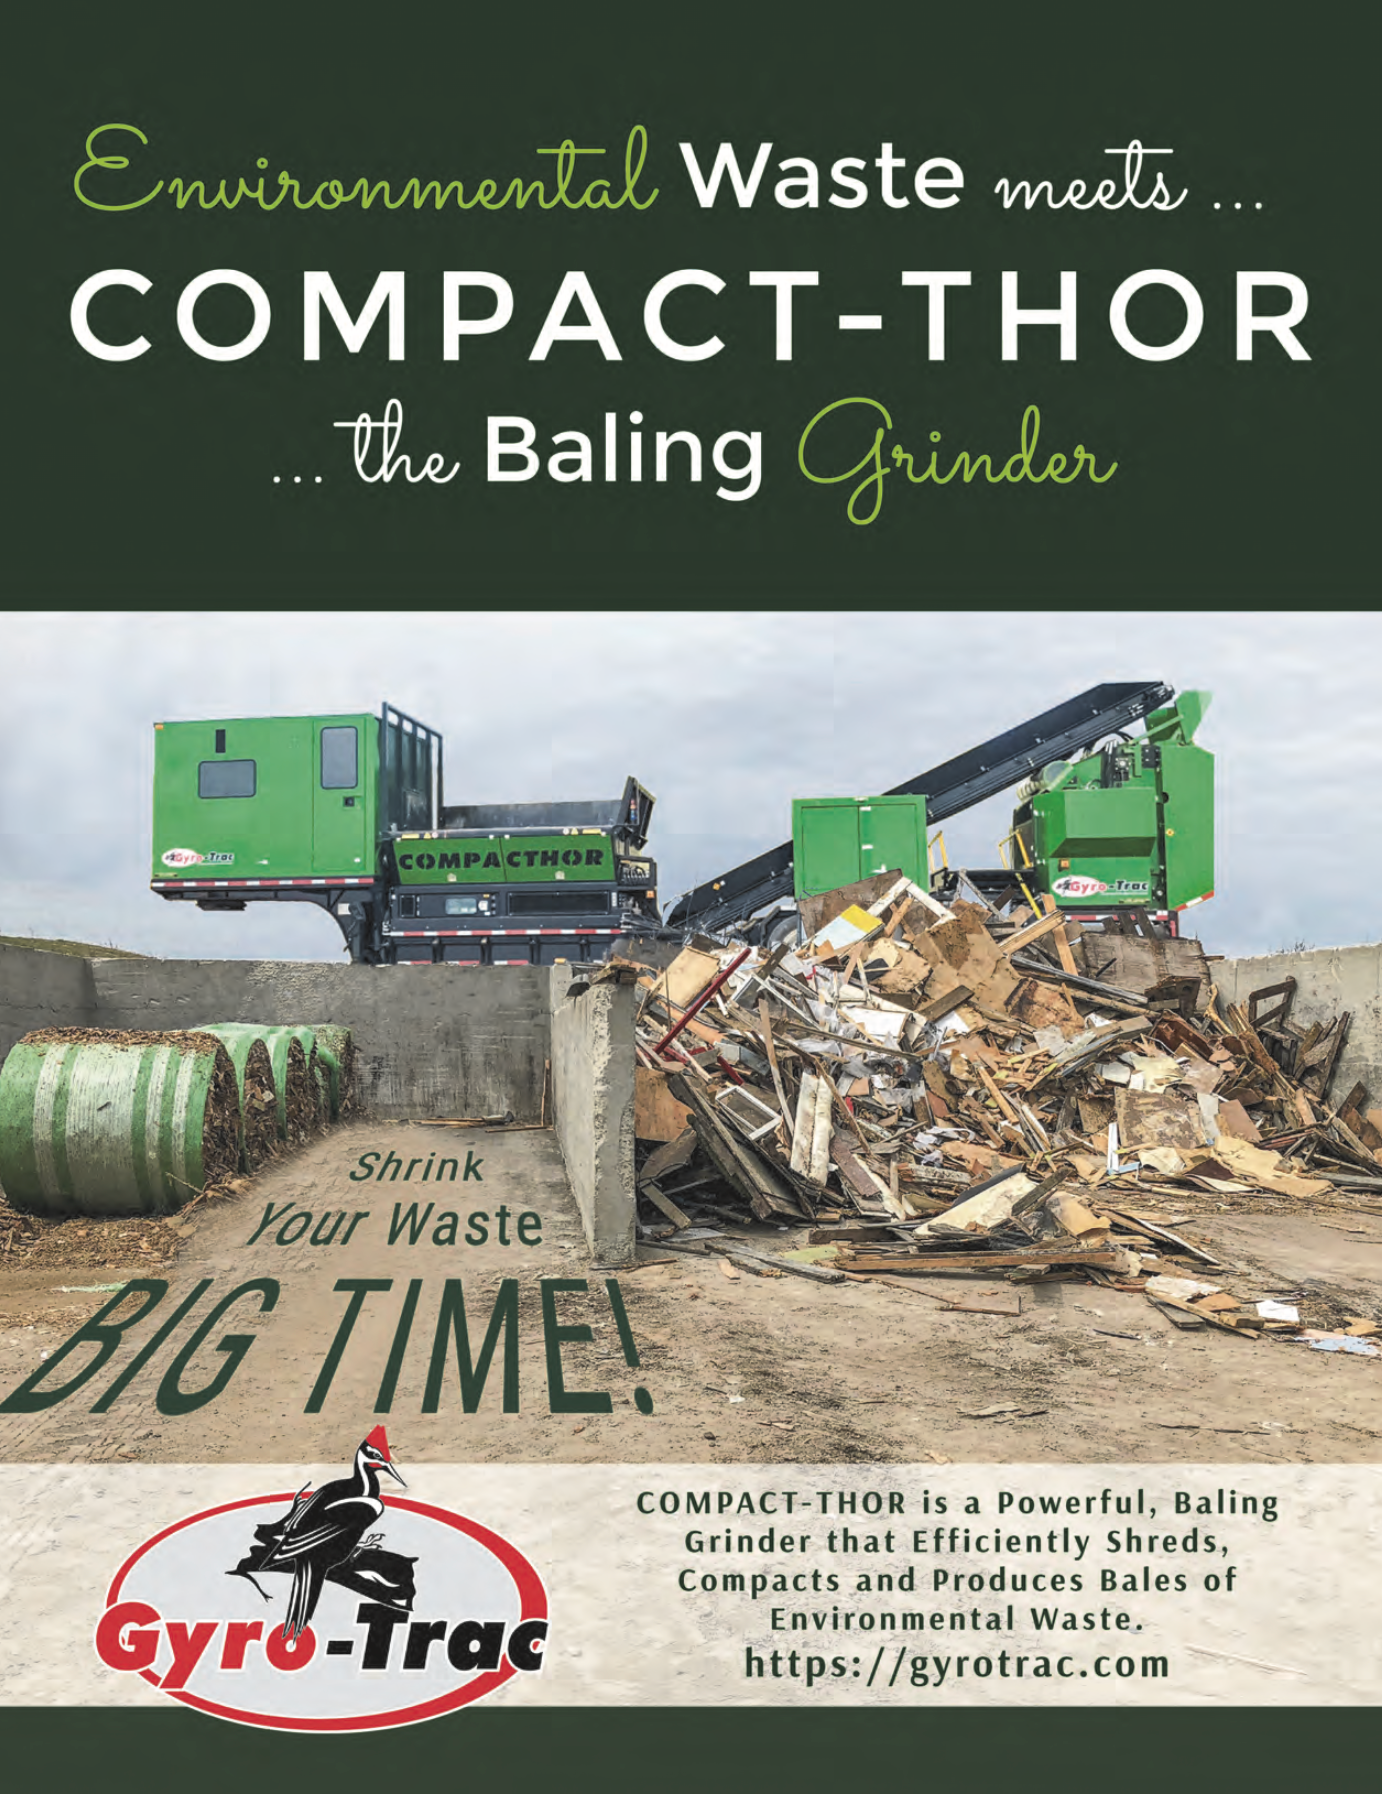 COMPACT-THOR Baling Grinder